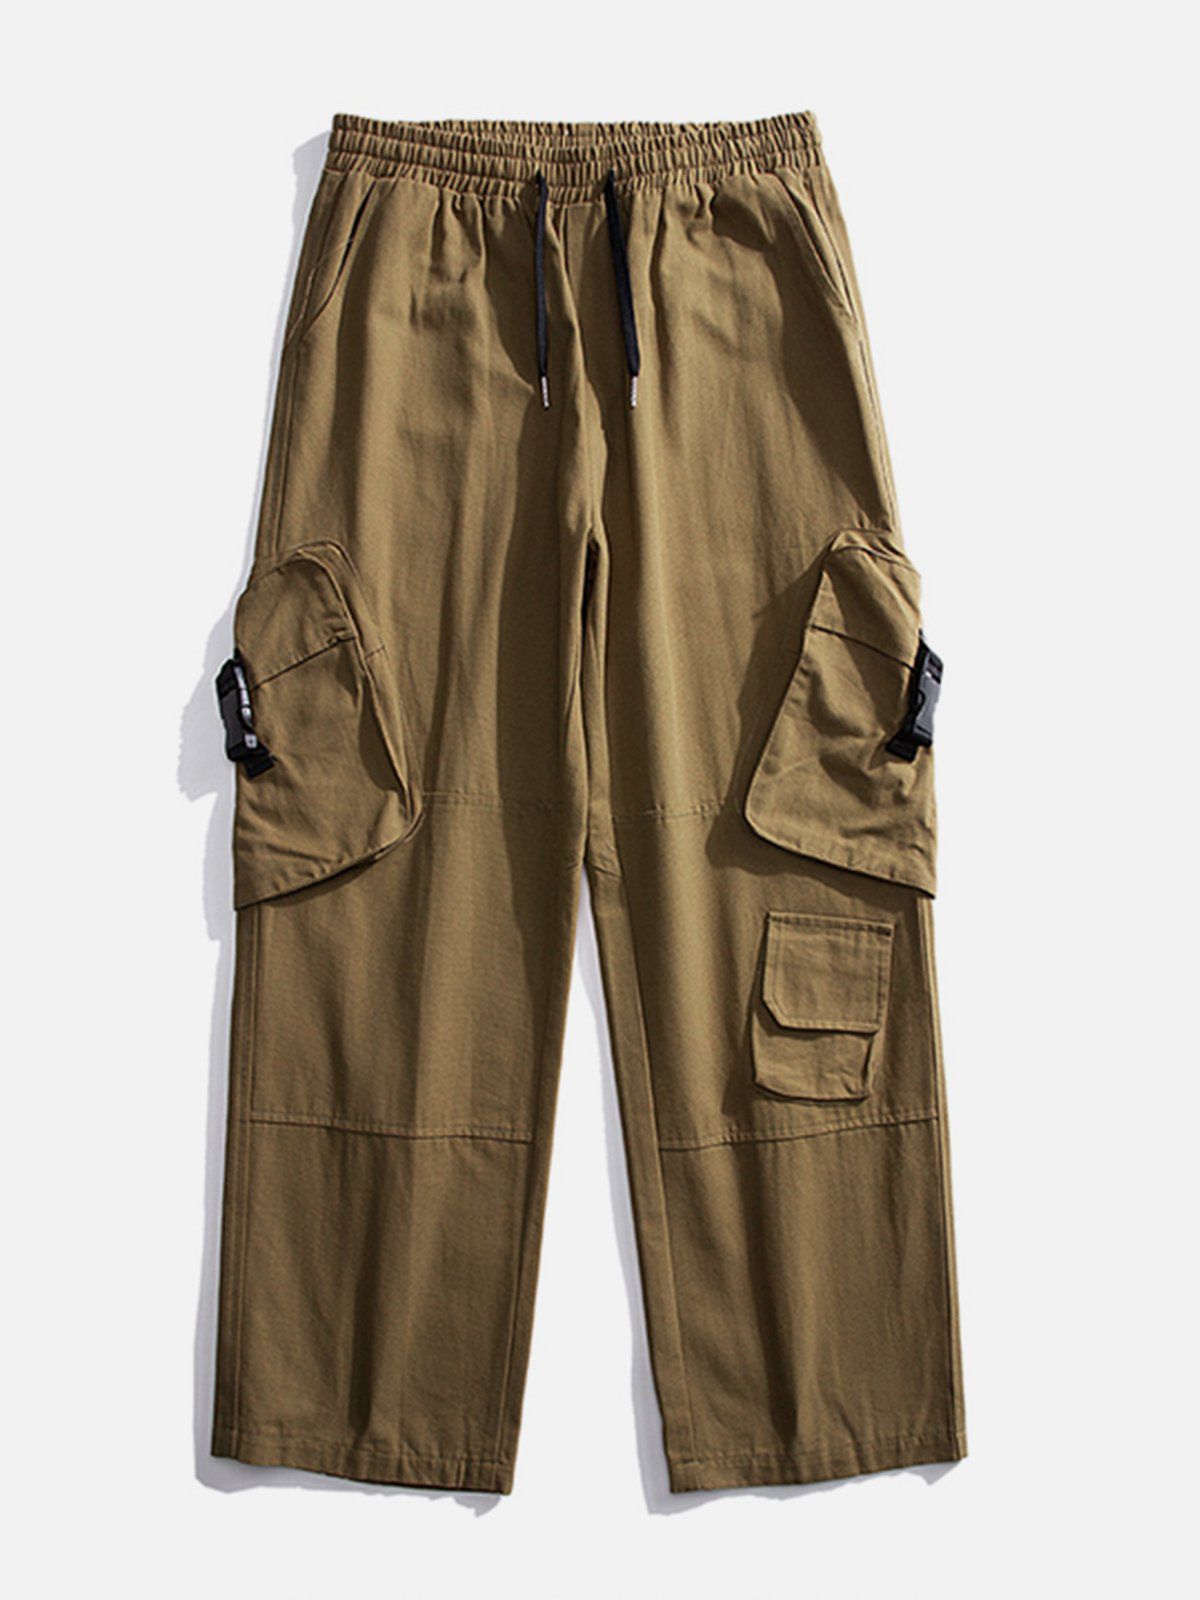 Majesda® - Tilt Bag Buckle Pocket Cargo Pants outfit ideas streetwear fashion